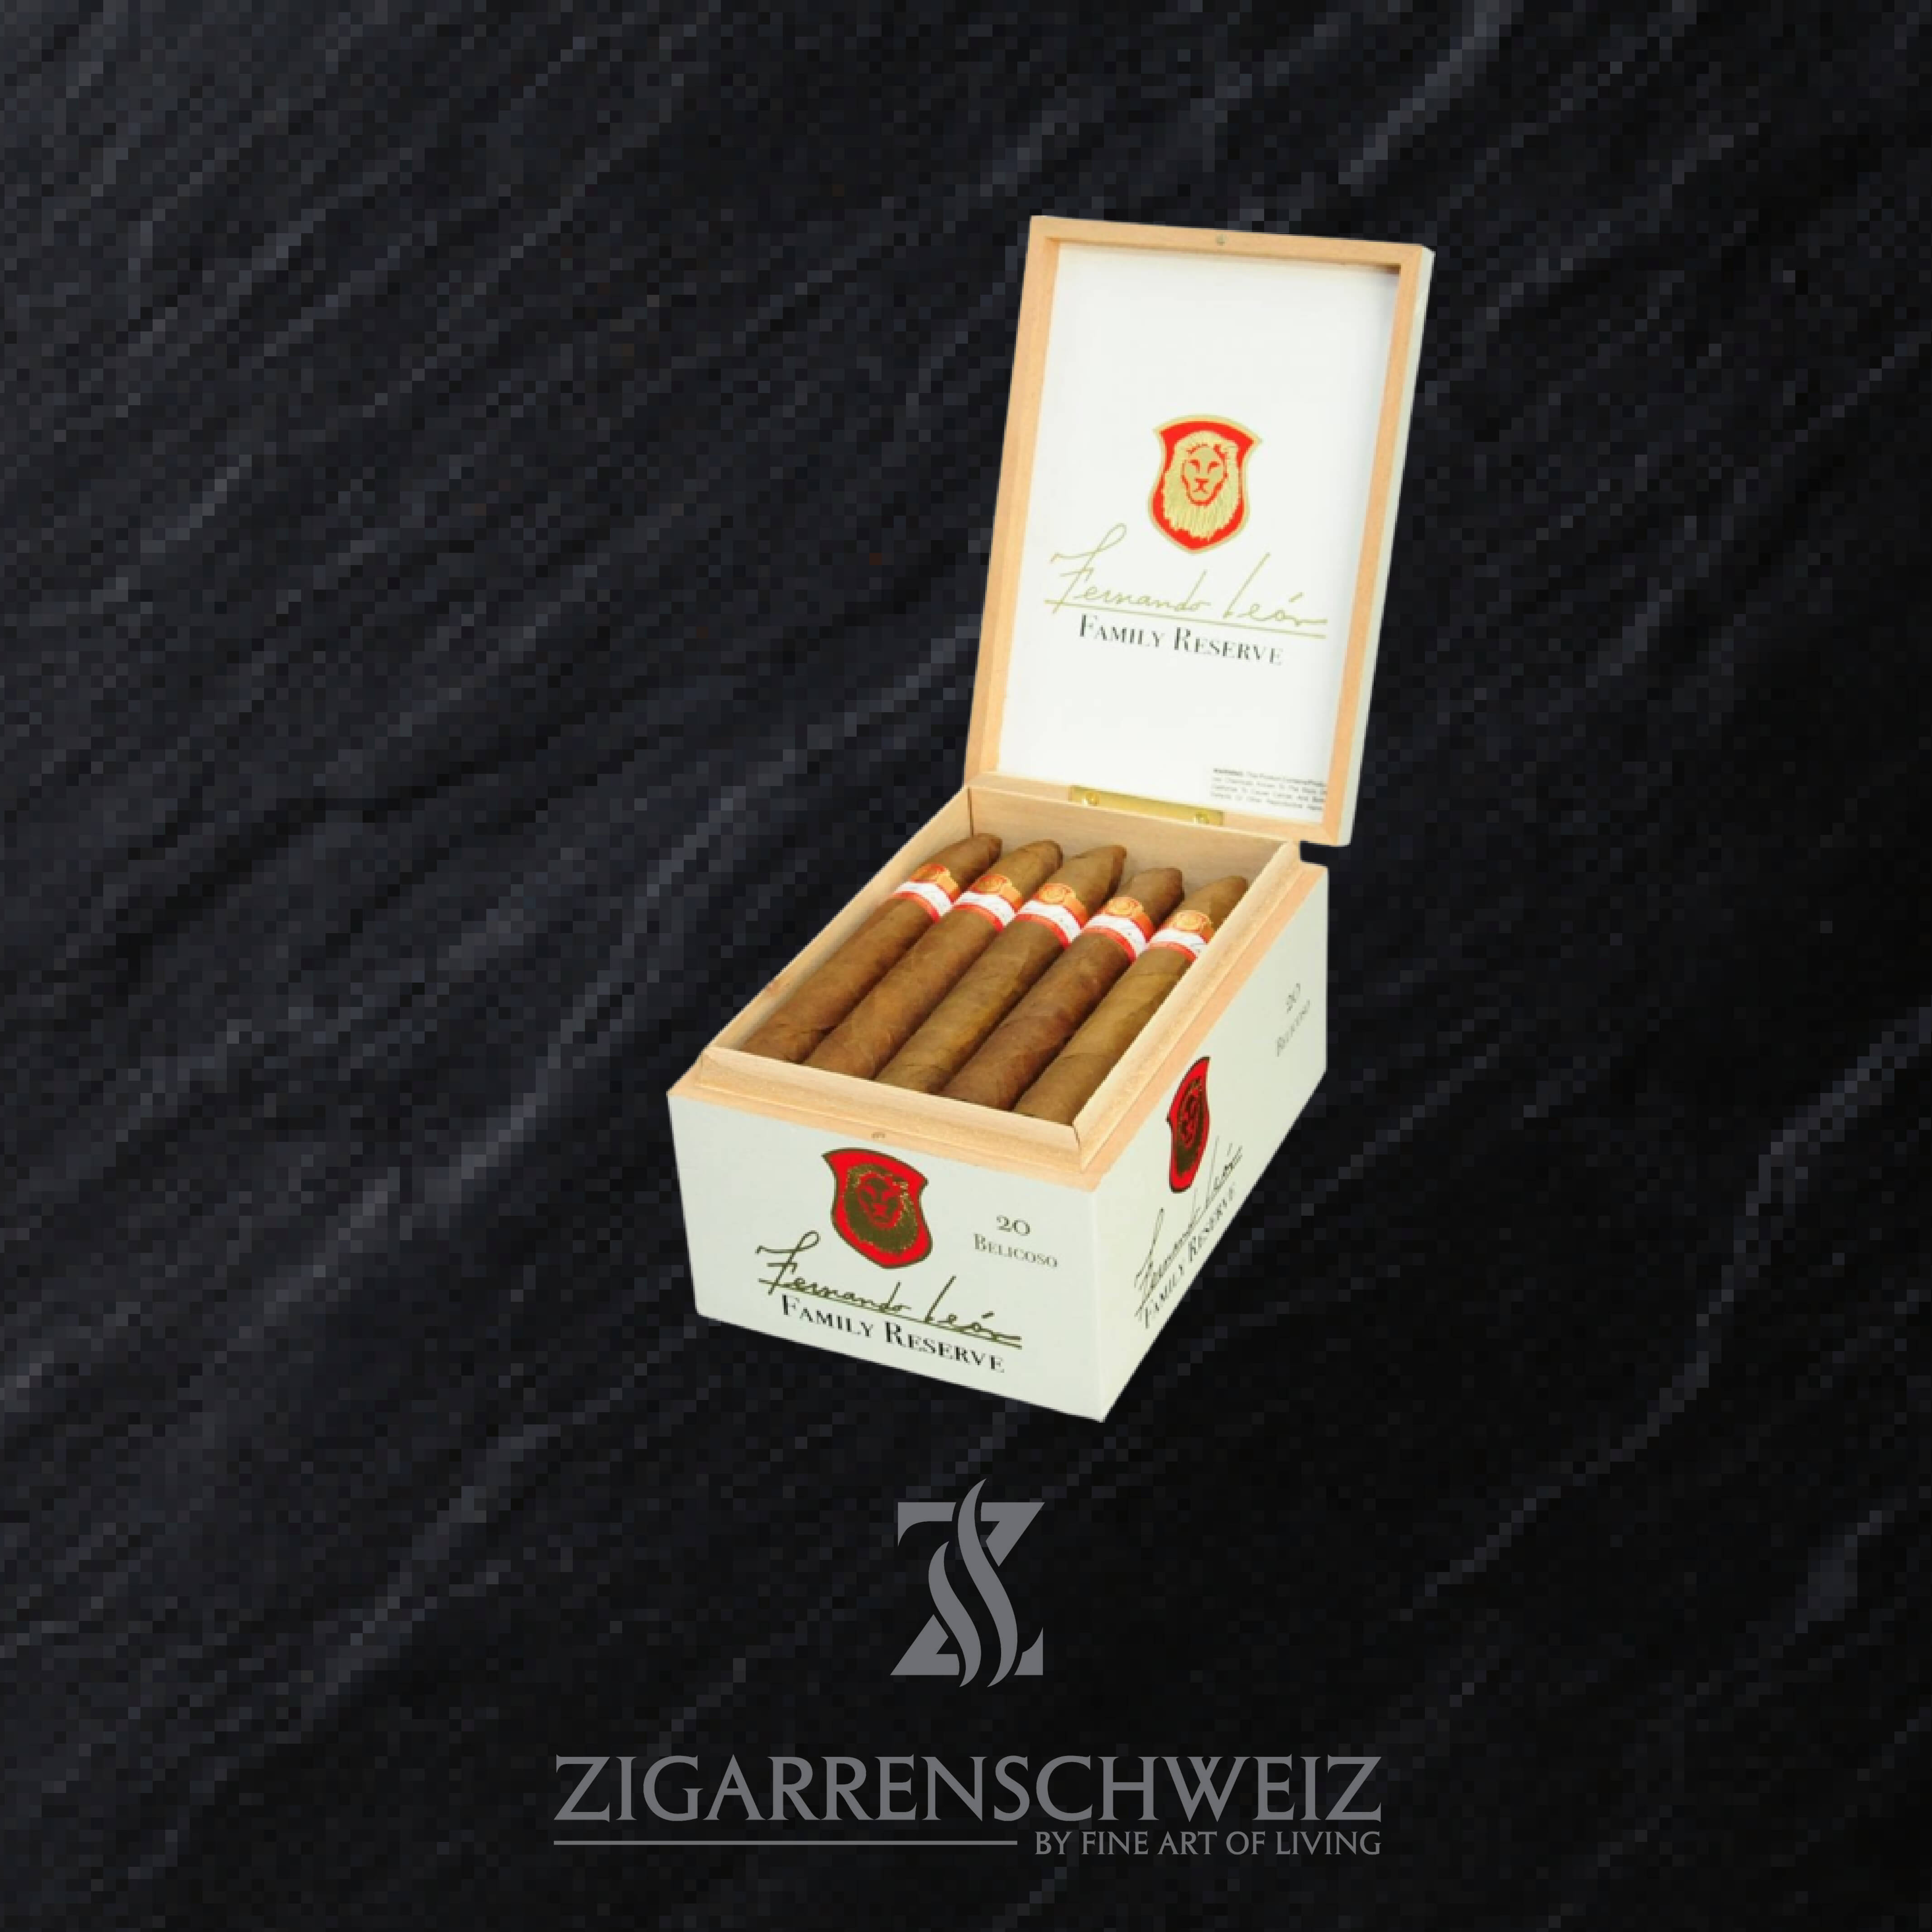 La Aurora Fernando Leon Belicoso Zigarren Kiste geöffnet